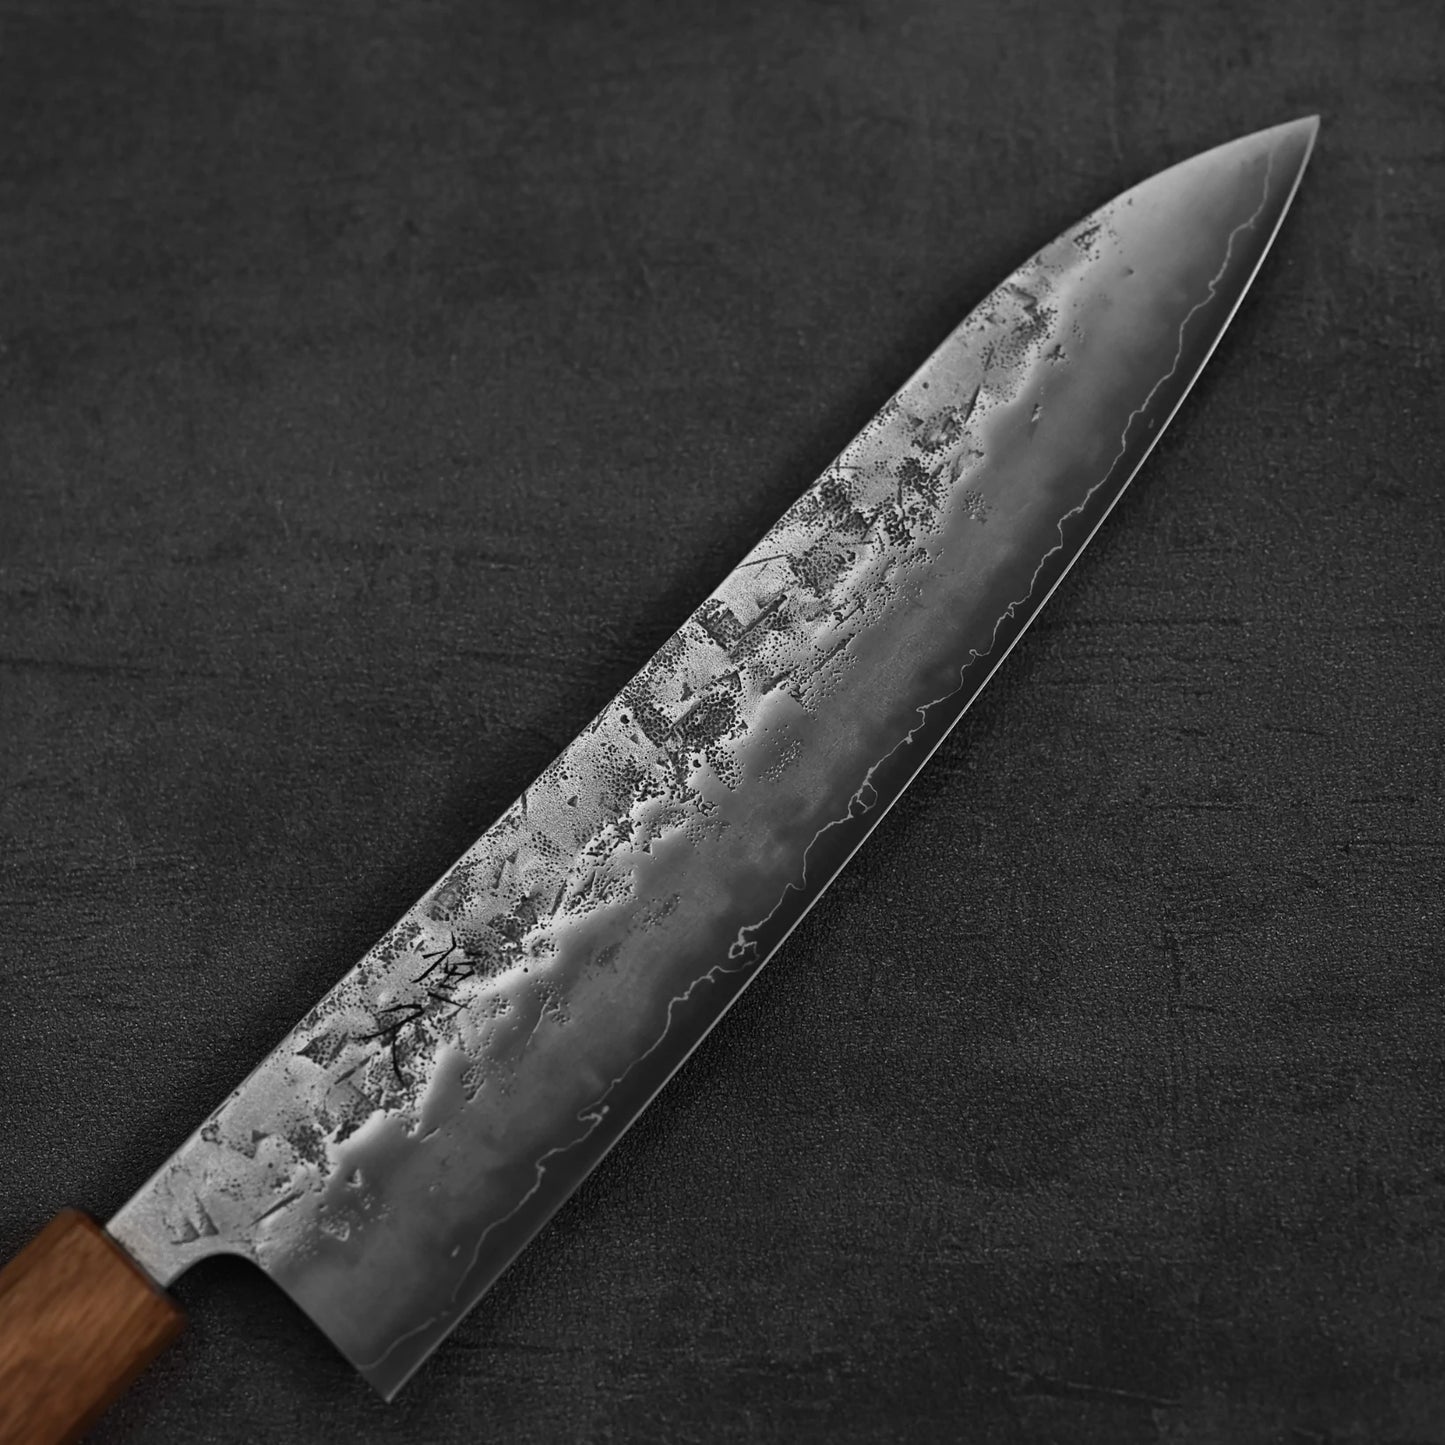 Close up view of the blade of Tsunehisa nashiji SLD gyuto knife